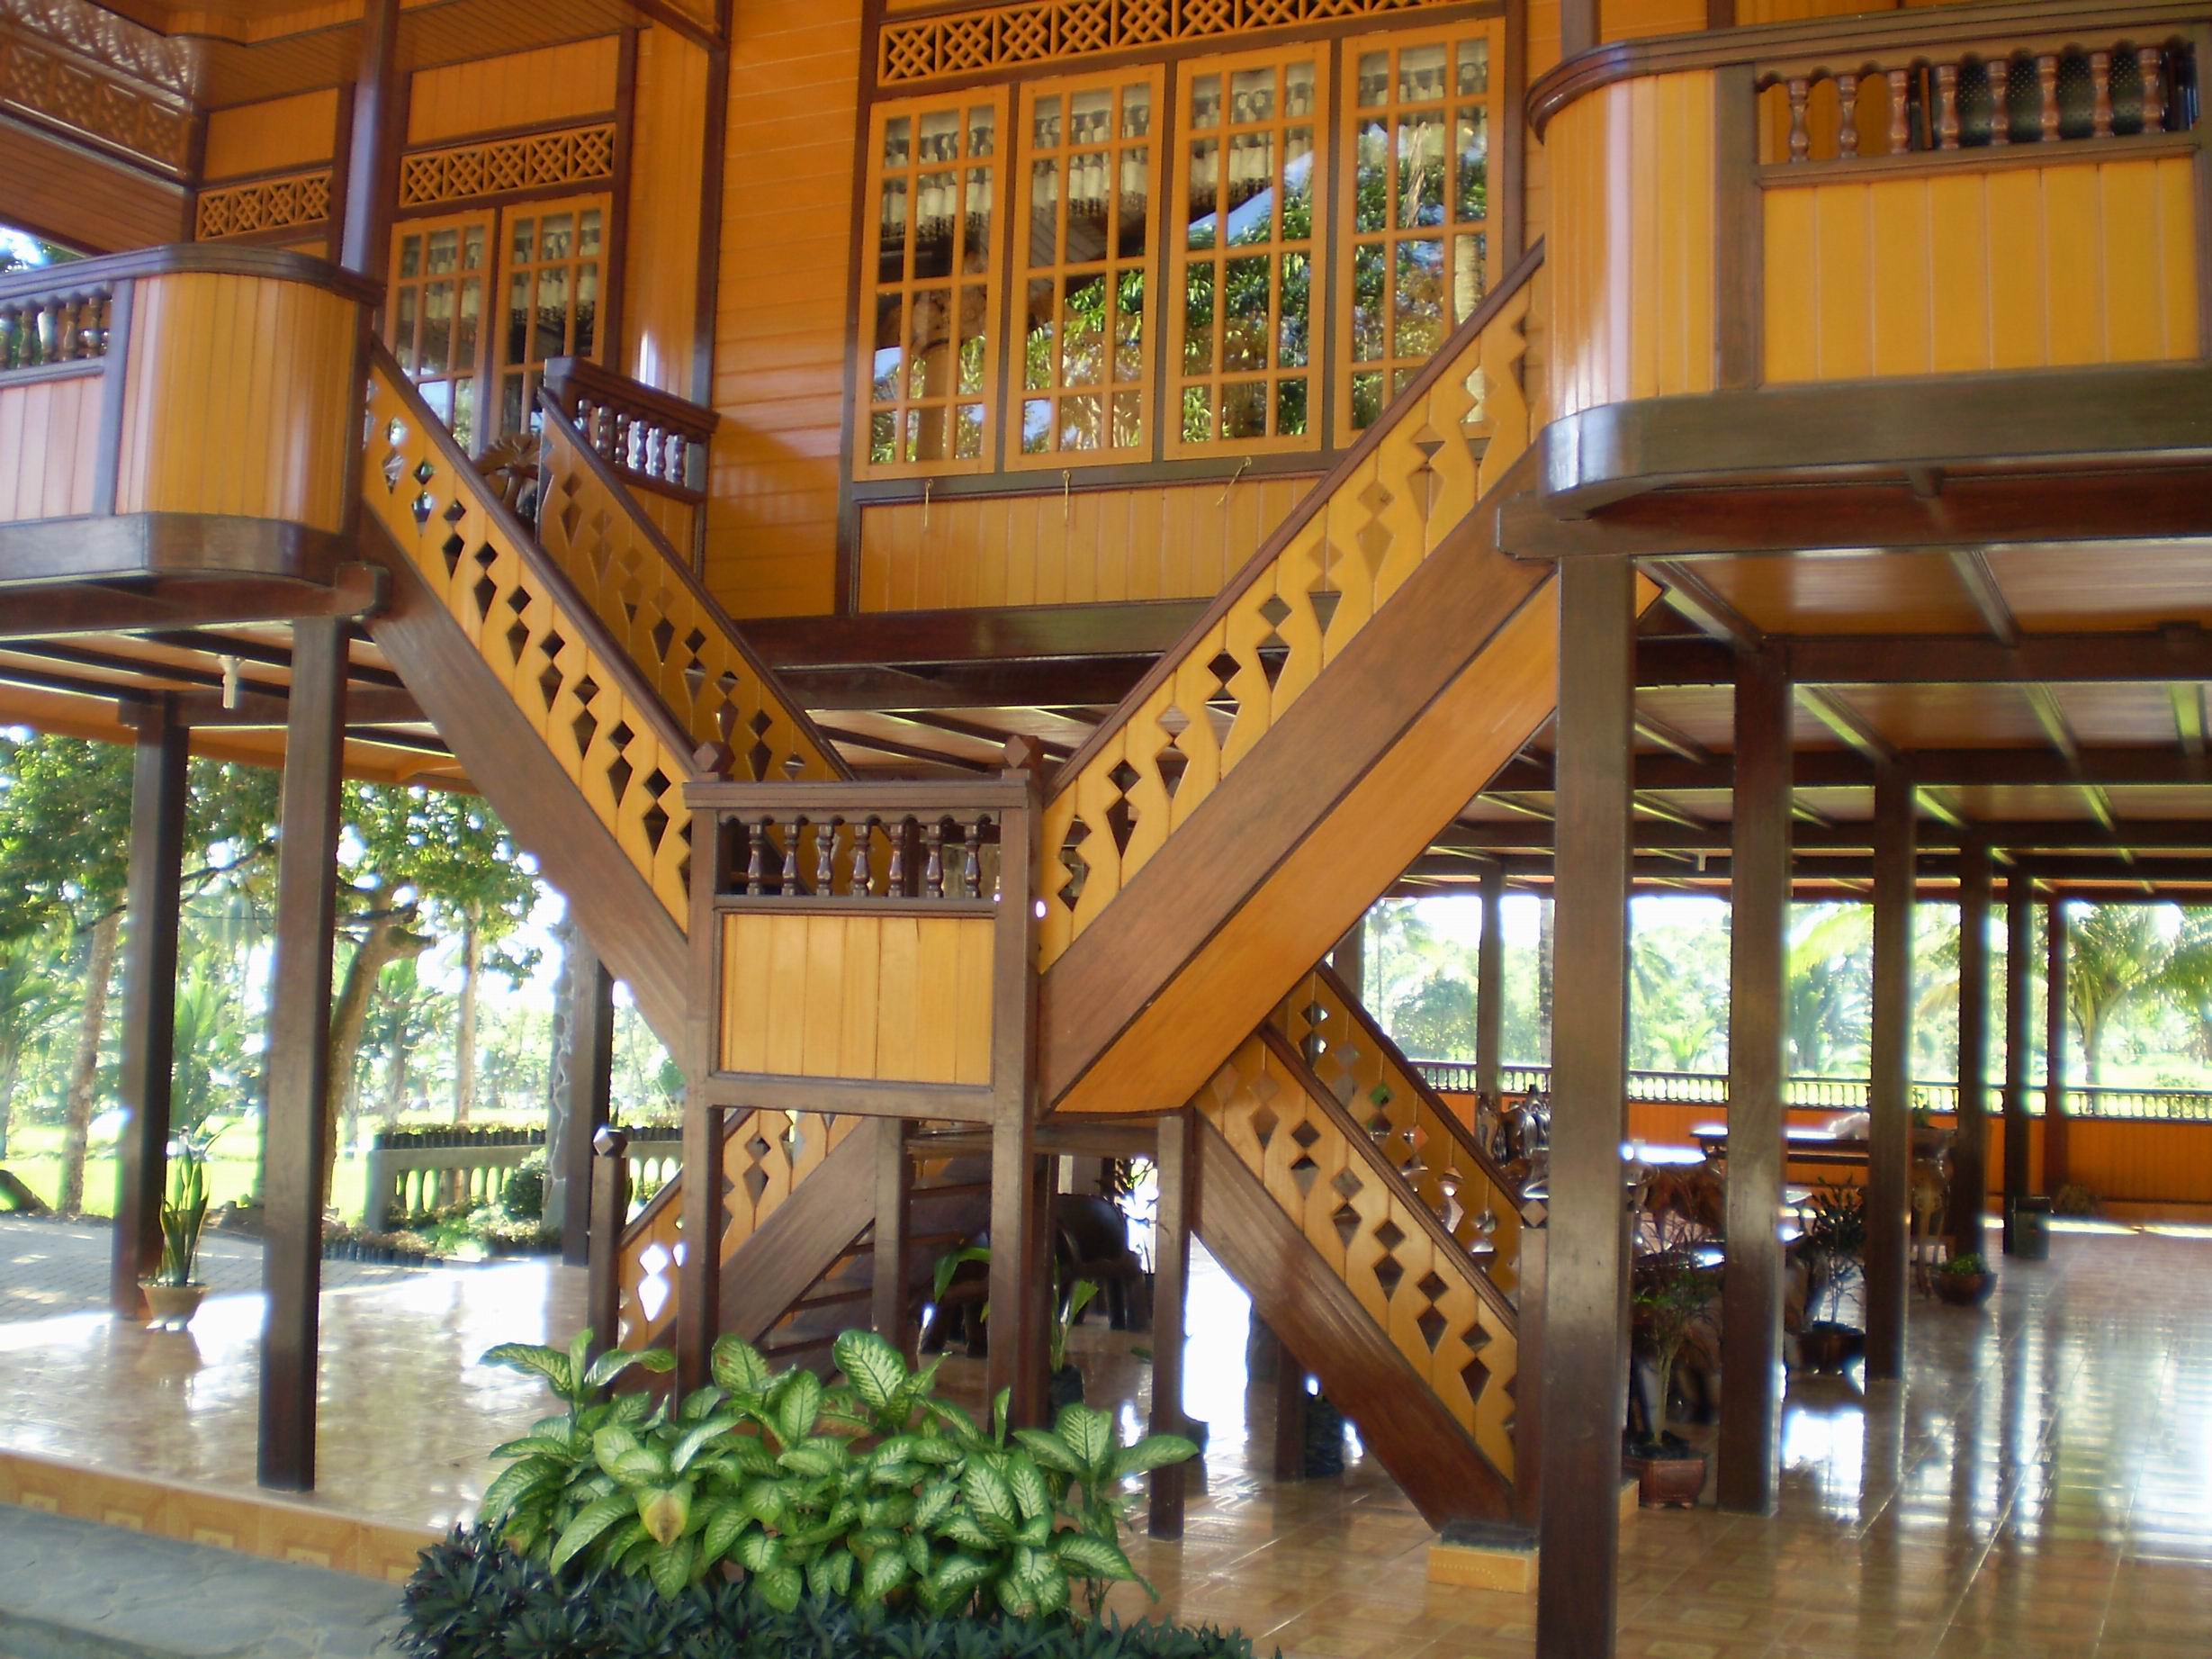 Rumah Adat Minahasa Sulawesi Utara